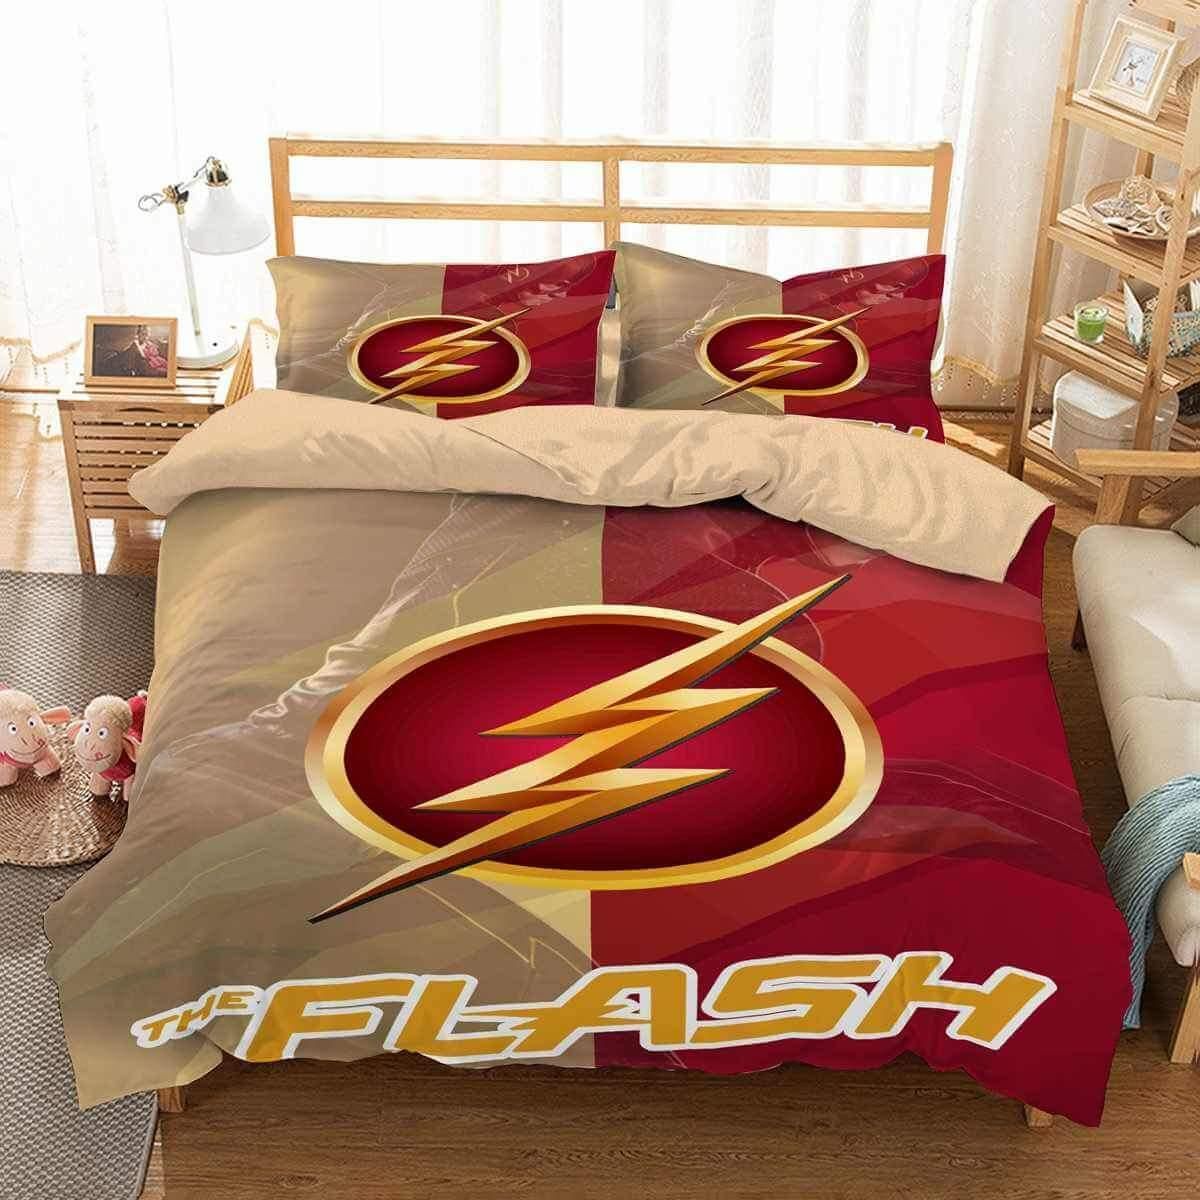 3d The Flash Bedding Set 4